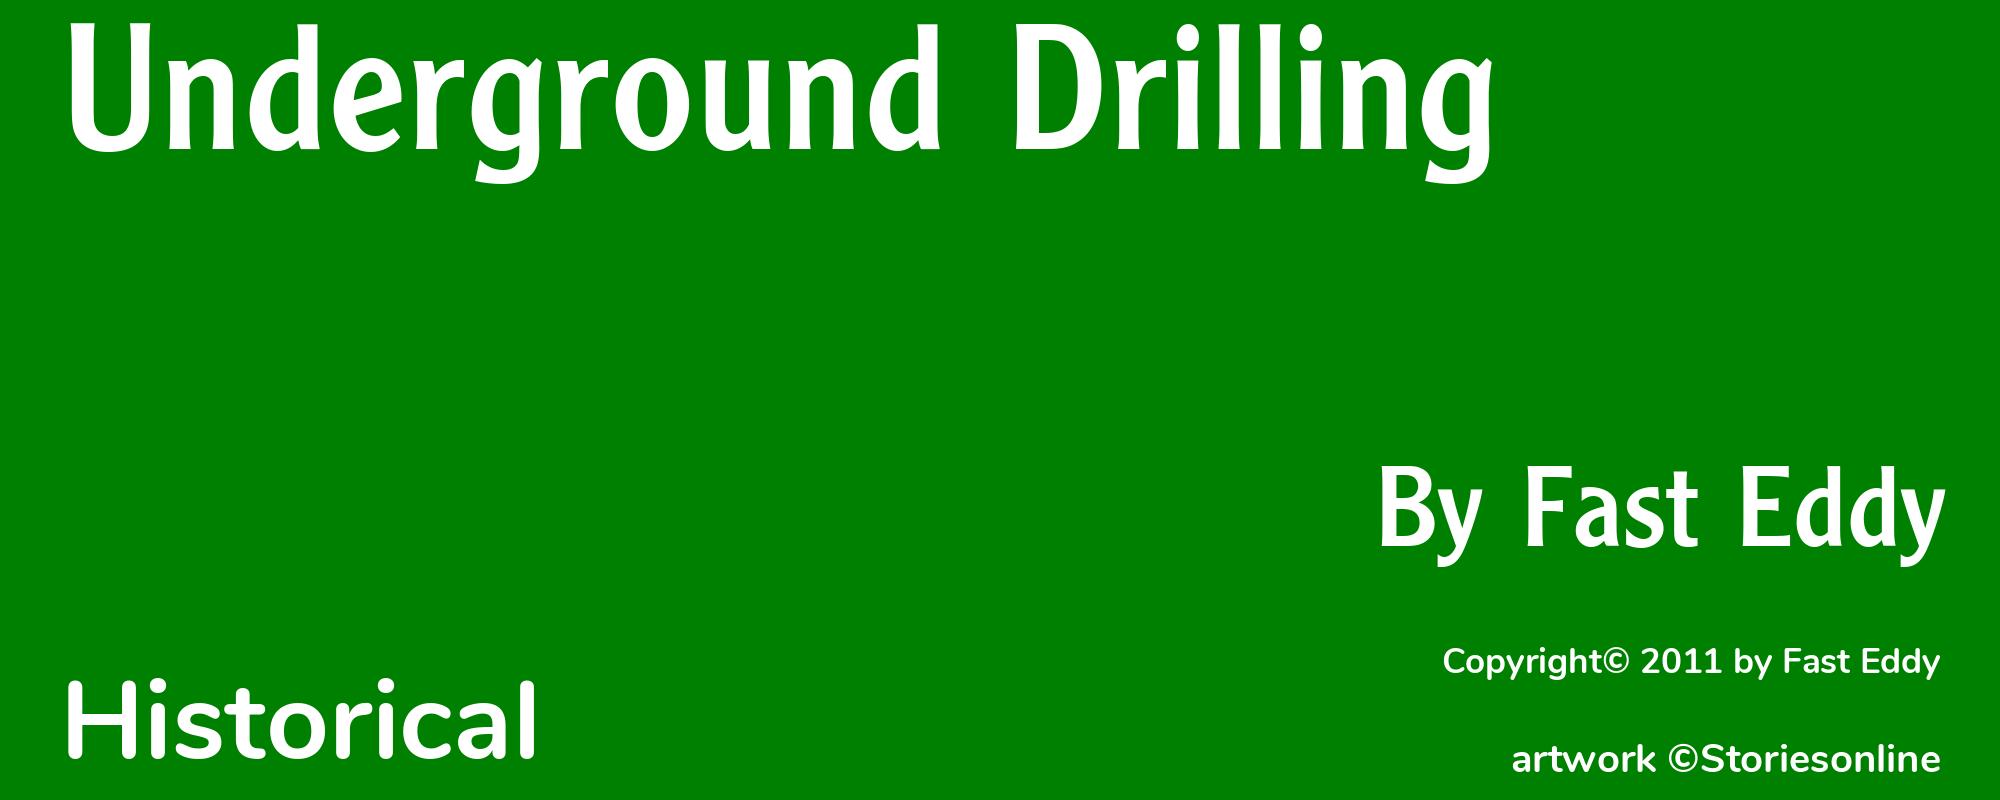 Underground Drilling - Cover